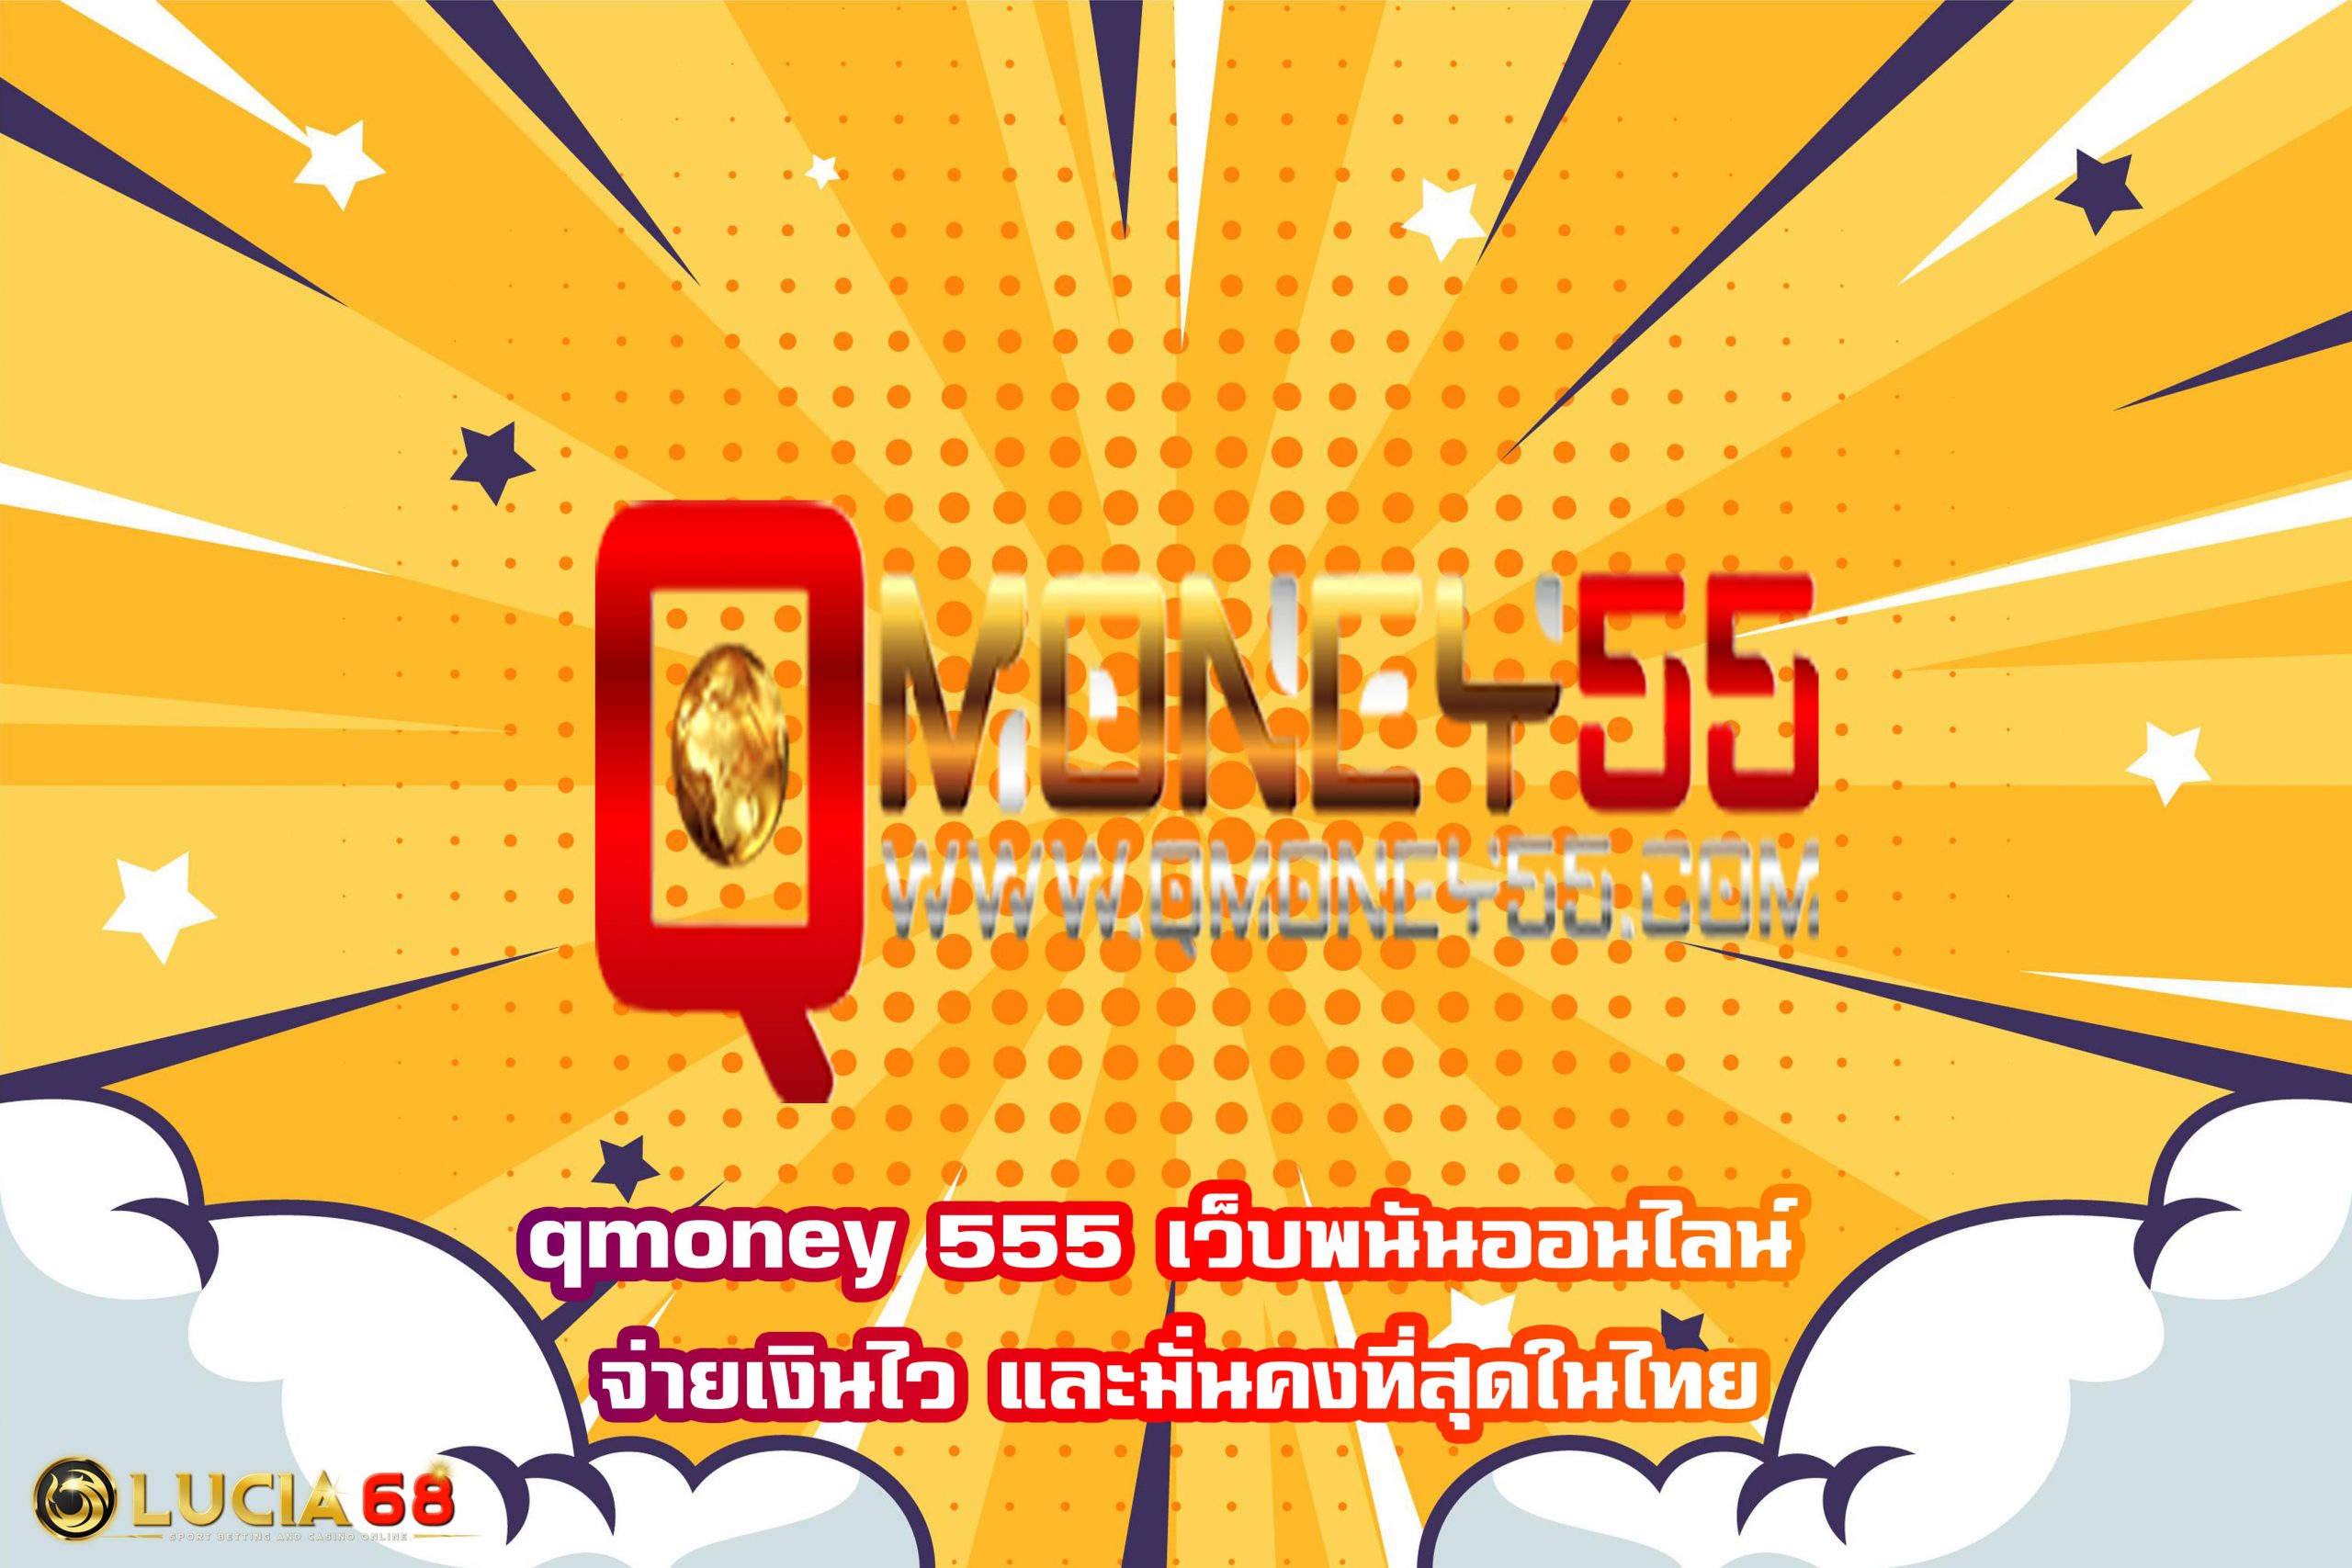 qmoney 555 เว็บพนันออนไลน์ จ่ายเงินไว และมั่นคงที่สุดในไทย